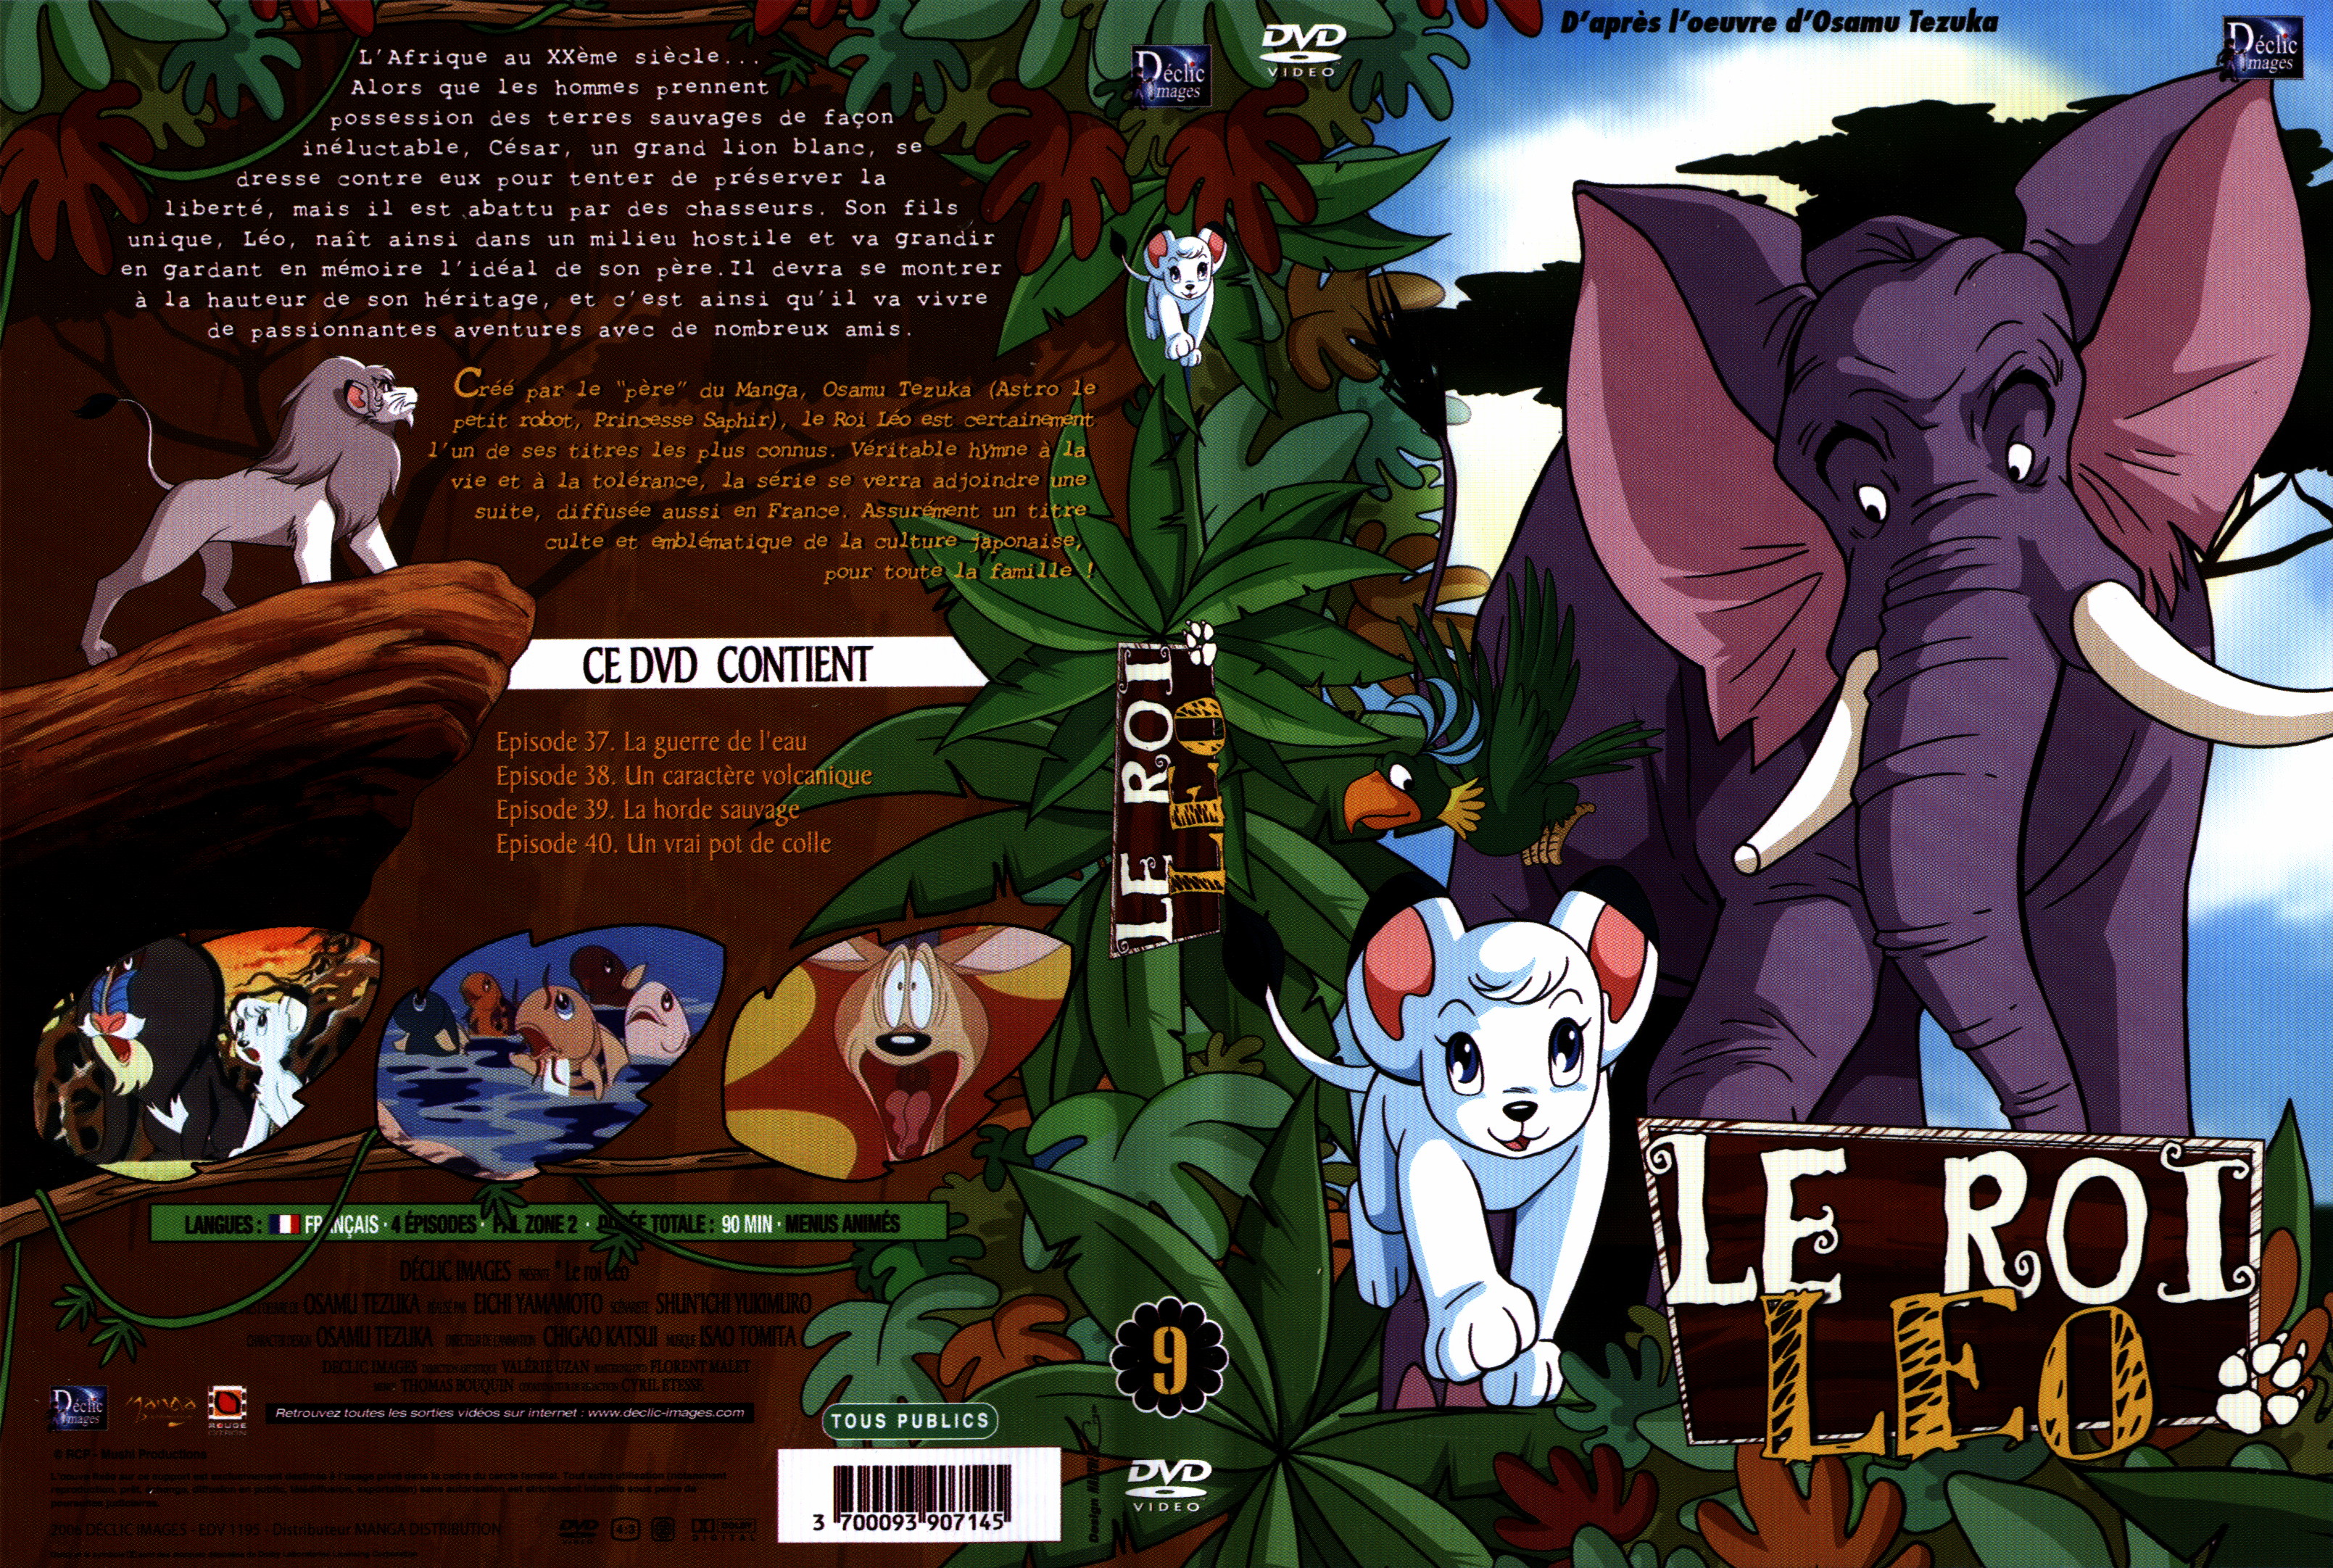 Jaquette DVD Le roi Leo vol 09